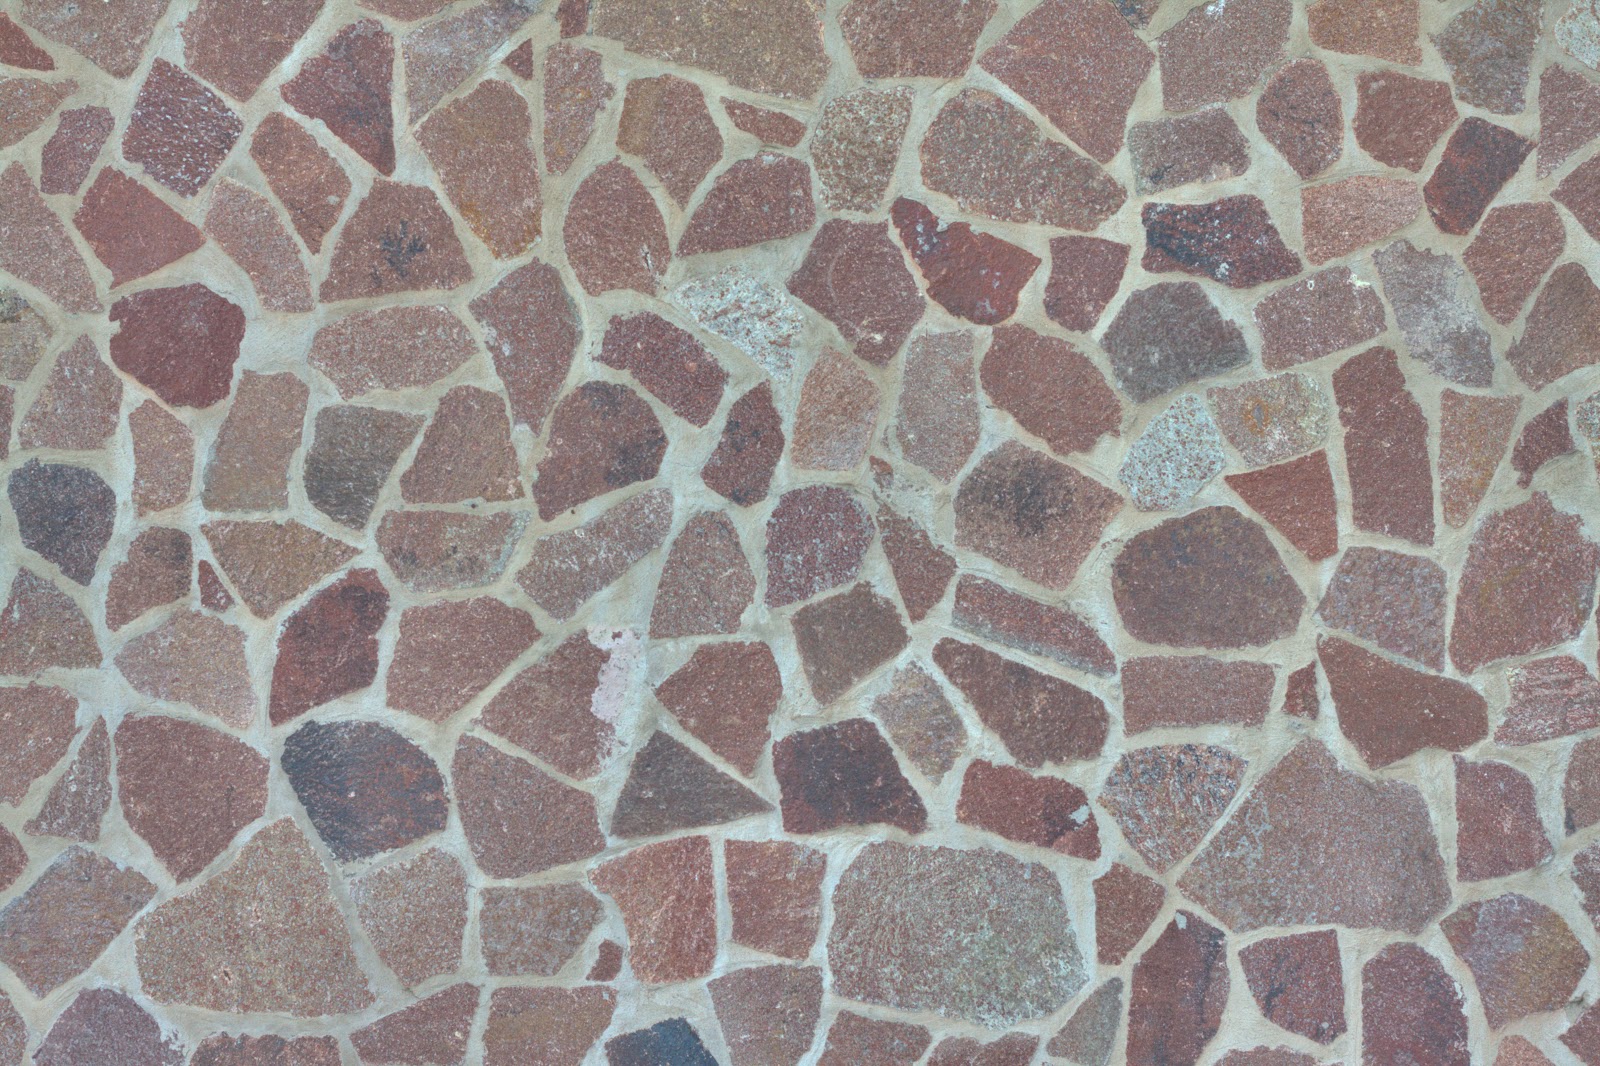 Stone giraffe floor tiles texture 4770x3178